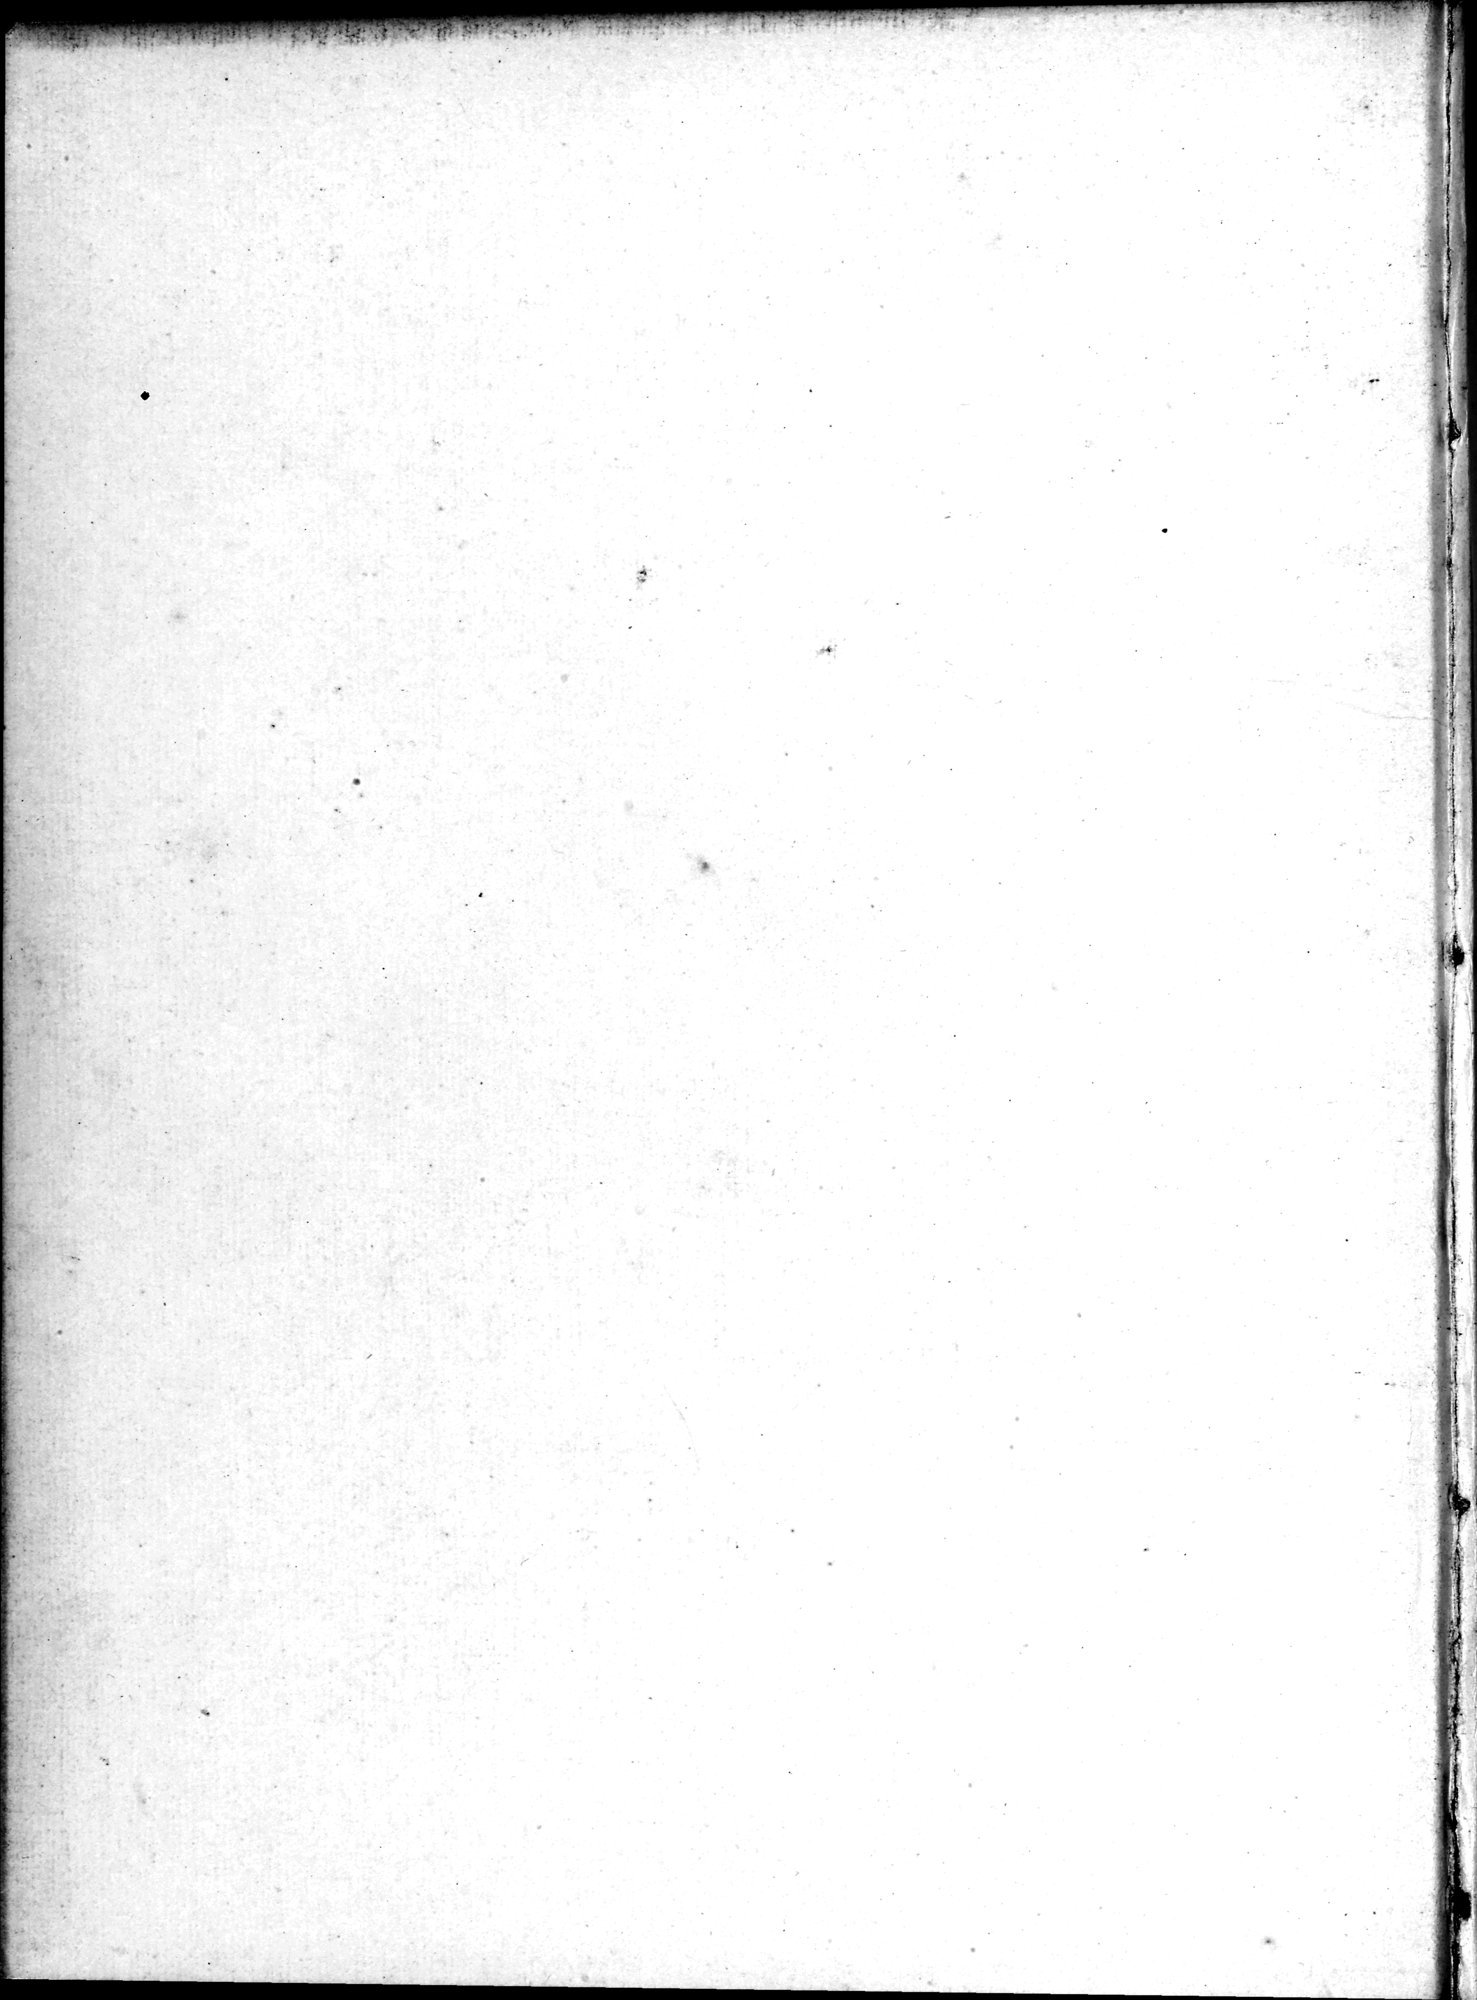 Mongoliia i Kam : vol.2 / Page 4 (Grayscale High Resolution Image)